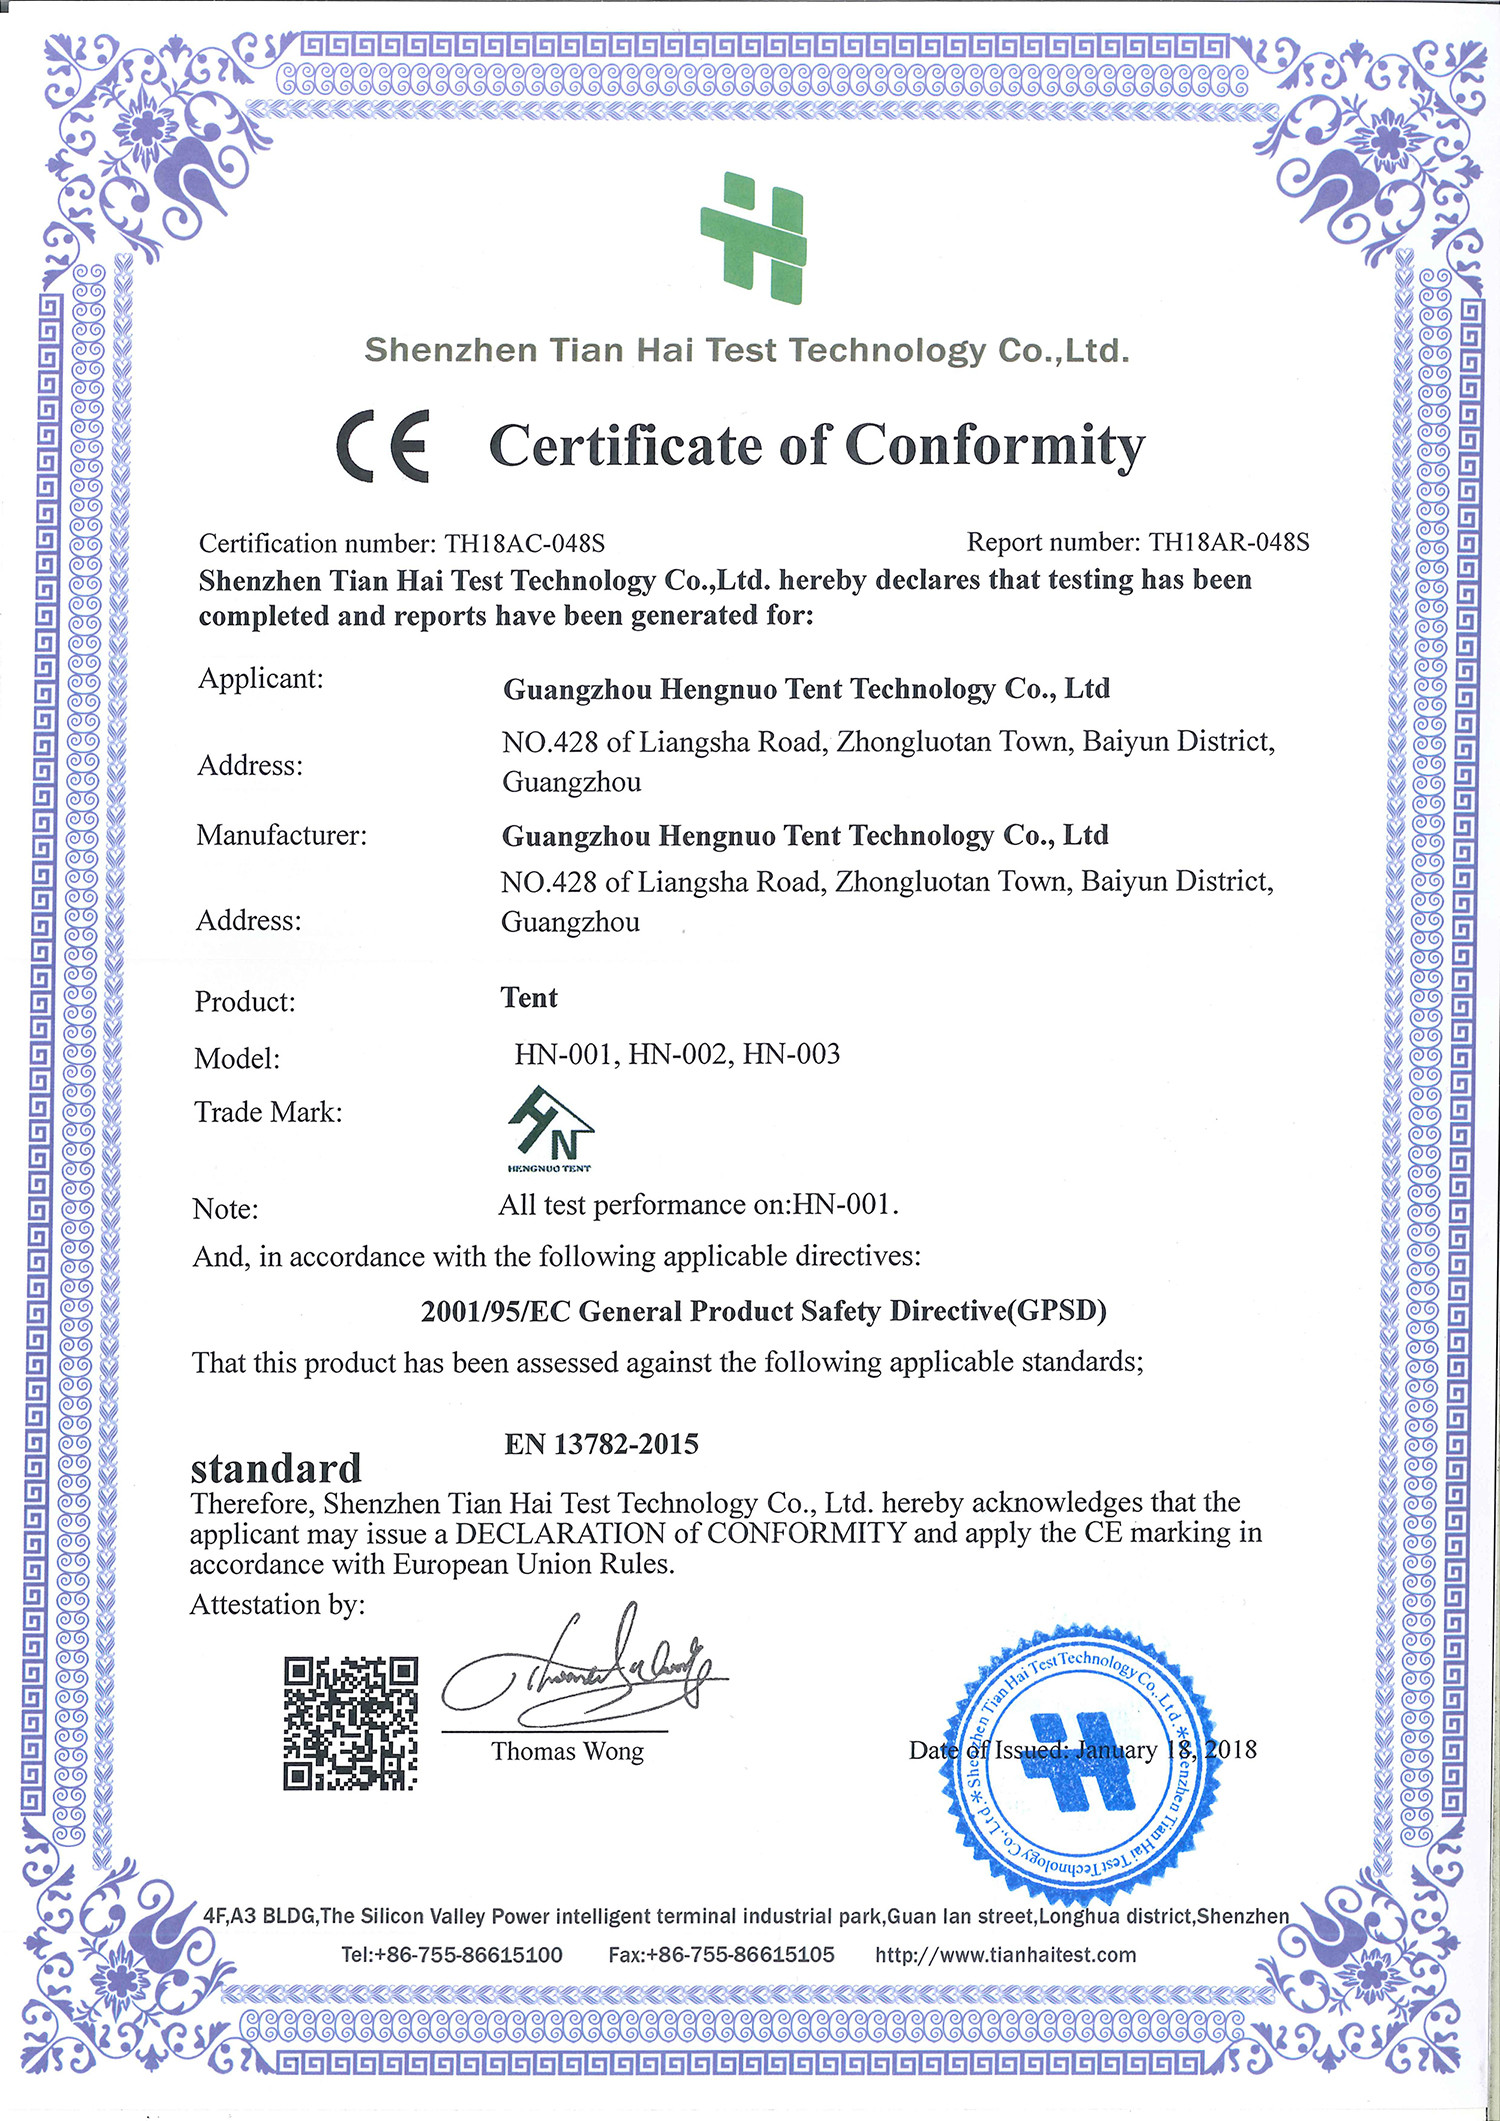 Guangzhou Hengnuo Tent Technology Co., Ltd. Certifications